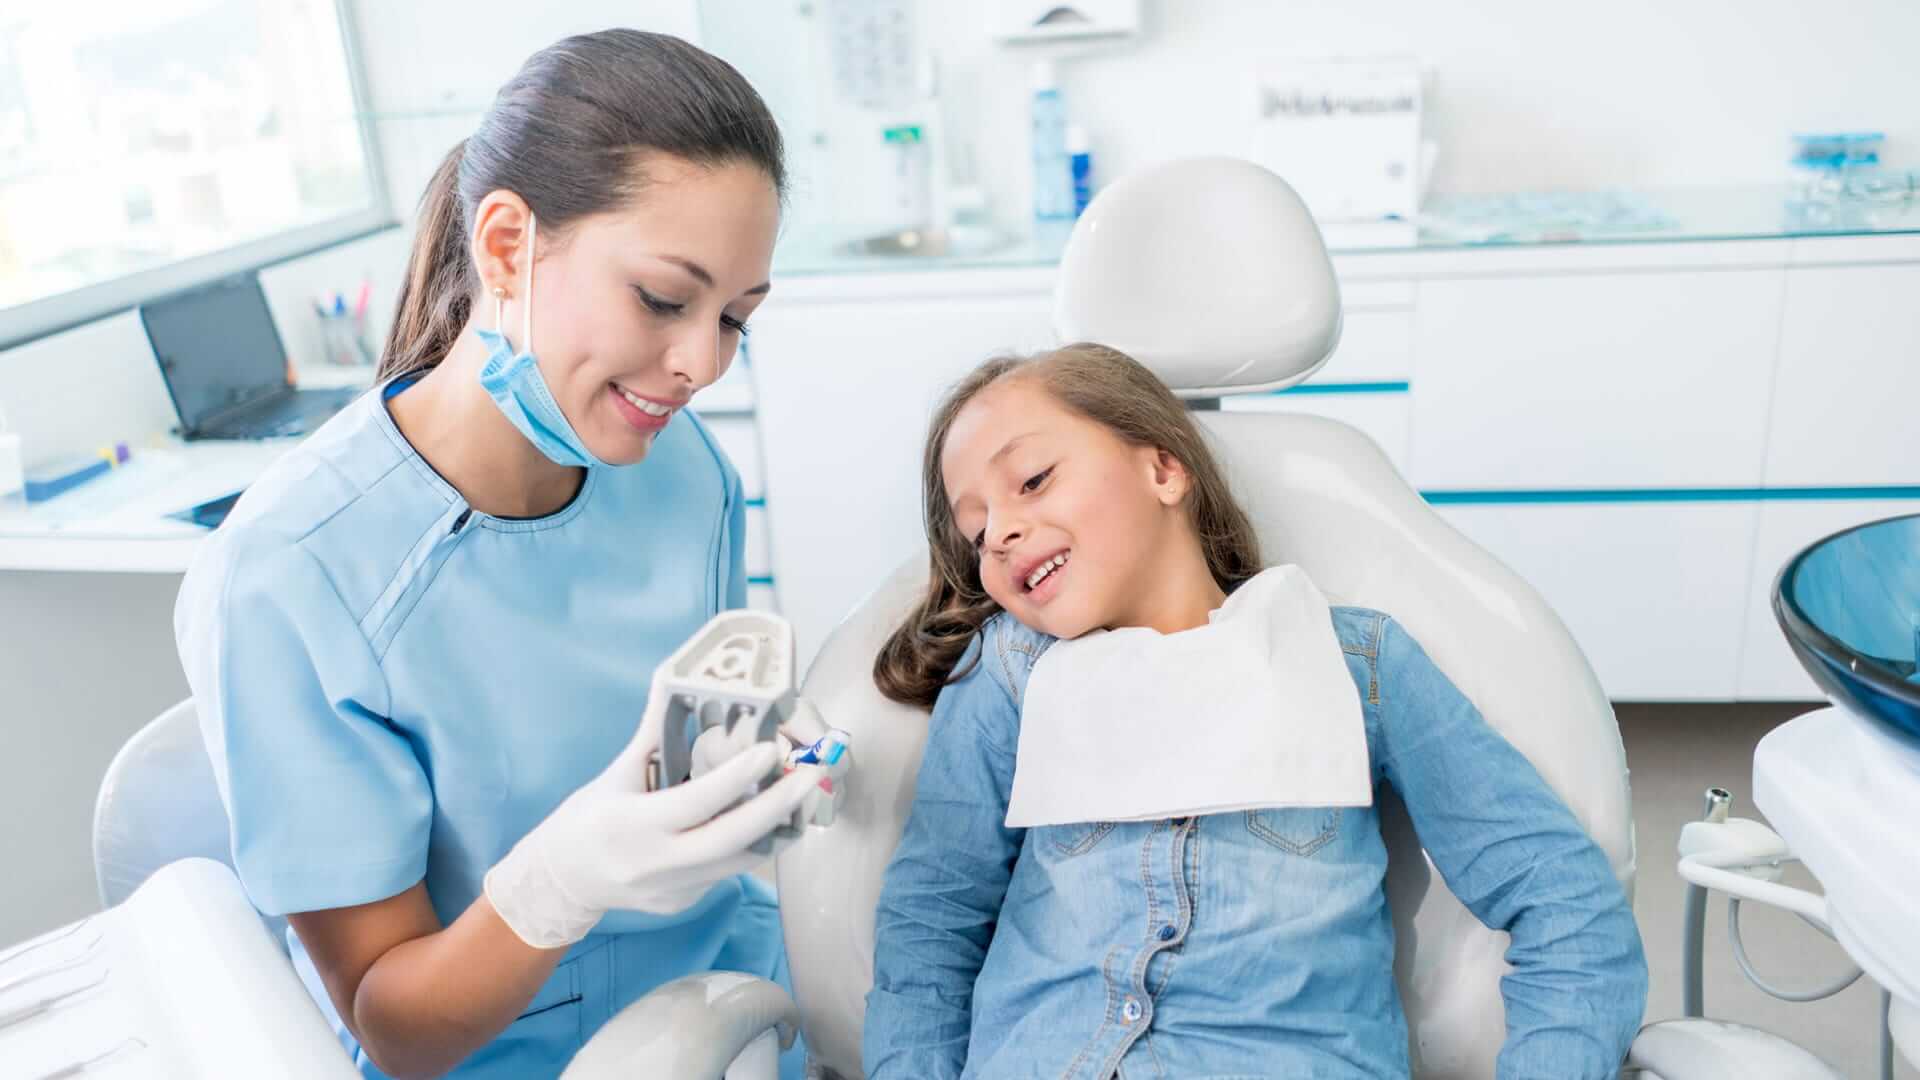 Dental Specialists